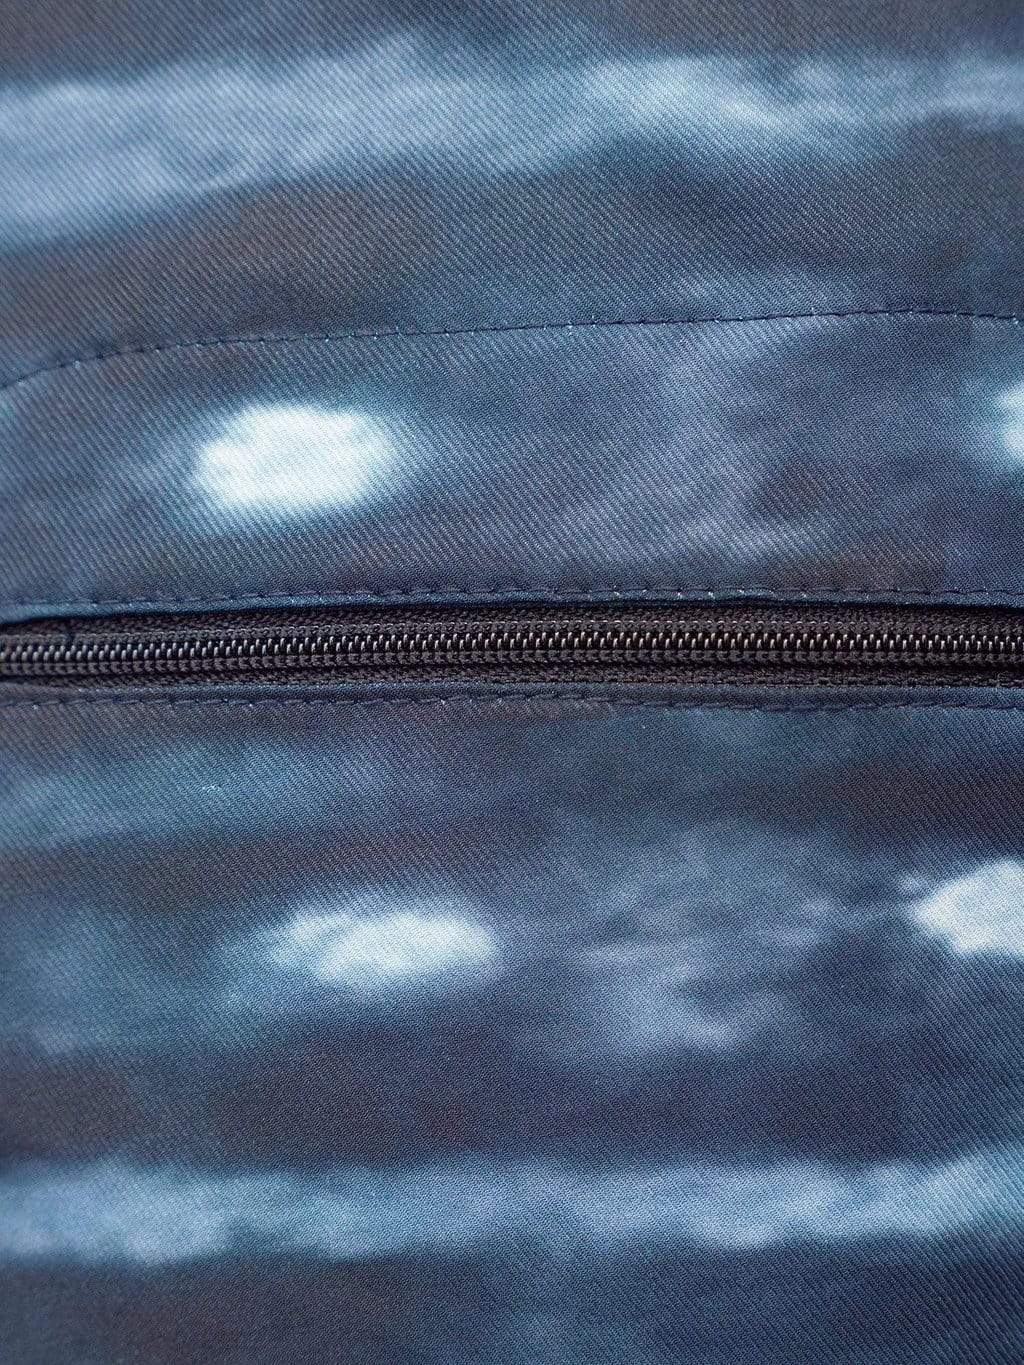 Waterlust Whale Shark Warrior Boardshorts side zipper close up